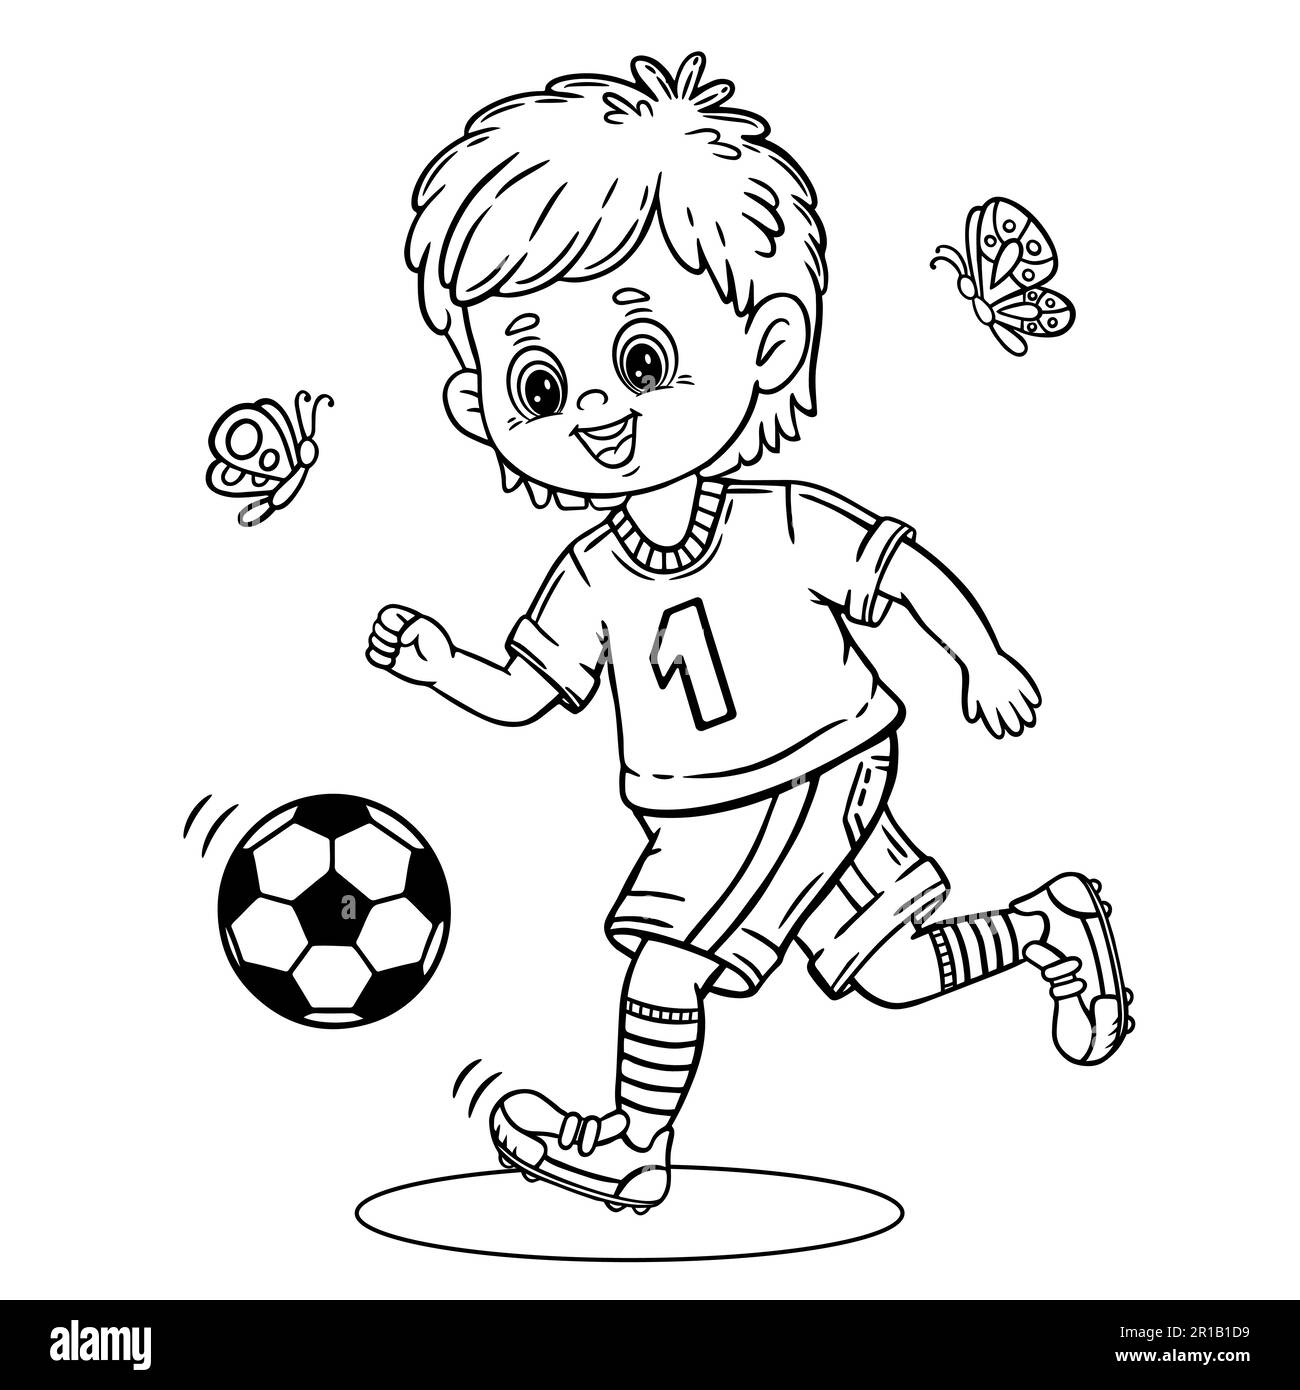 cute sports clipart - Clip Art Library